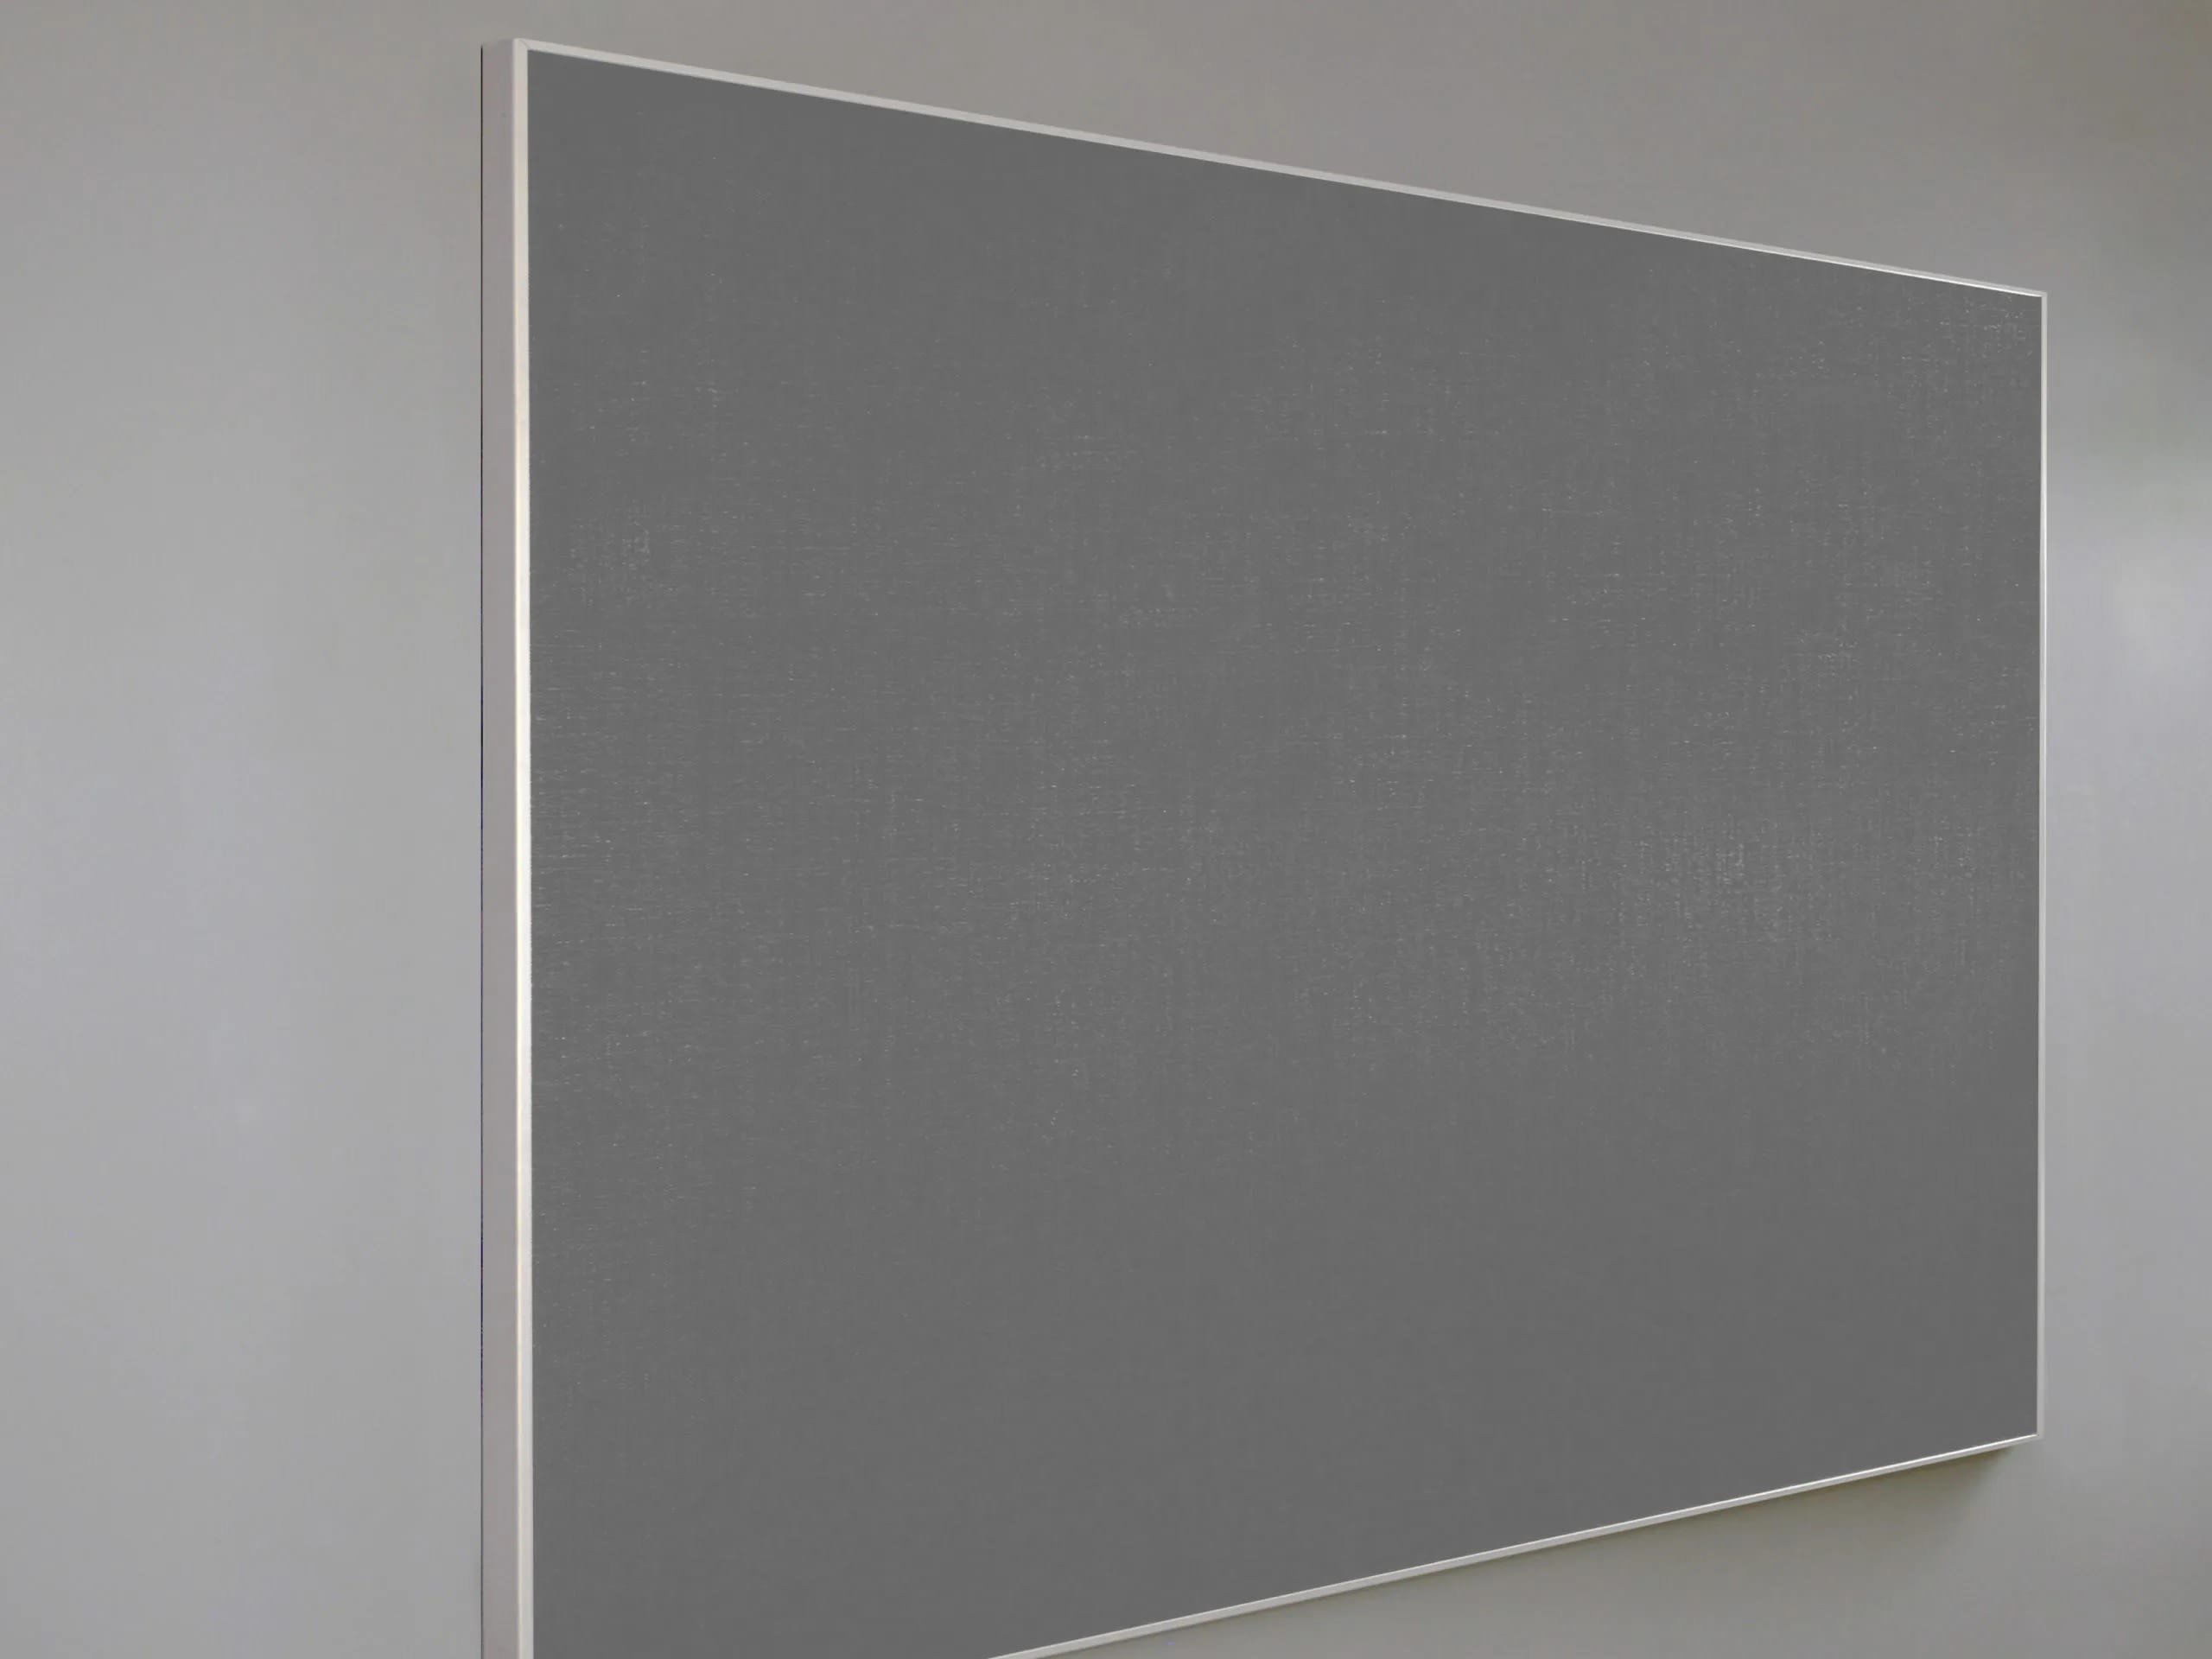  Lineco, Gray Binder Board 14.5 x 20.5 Inch, 0.08